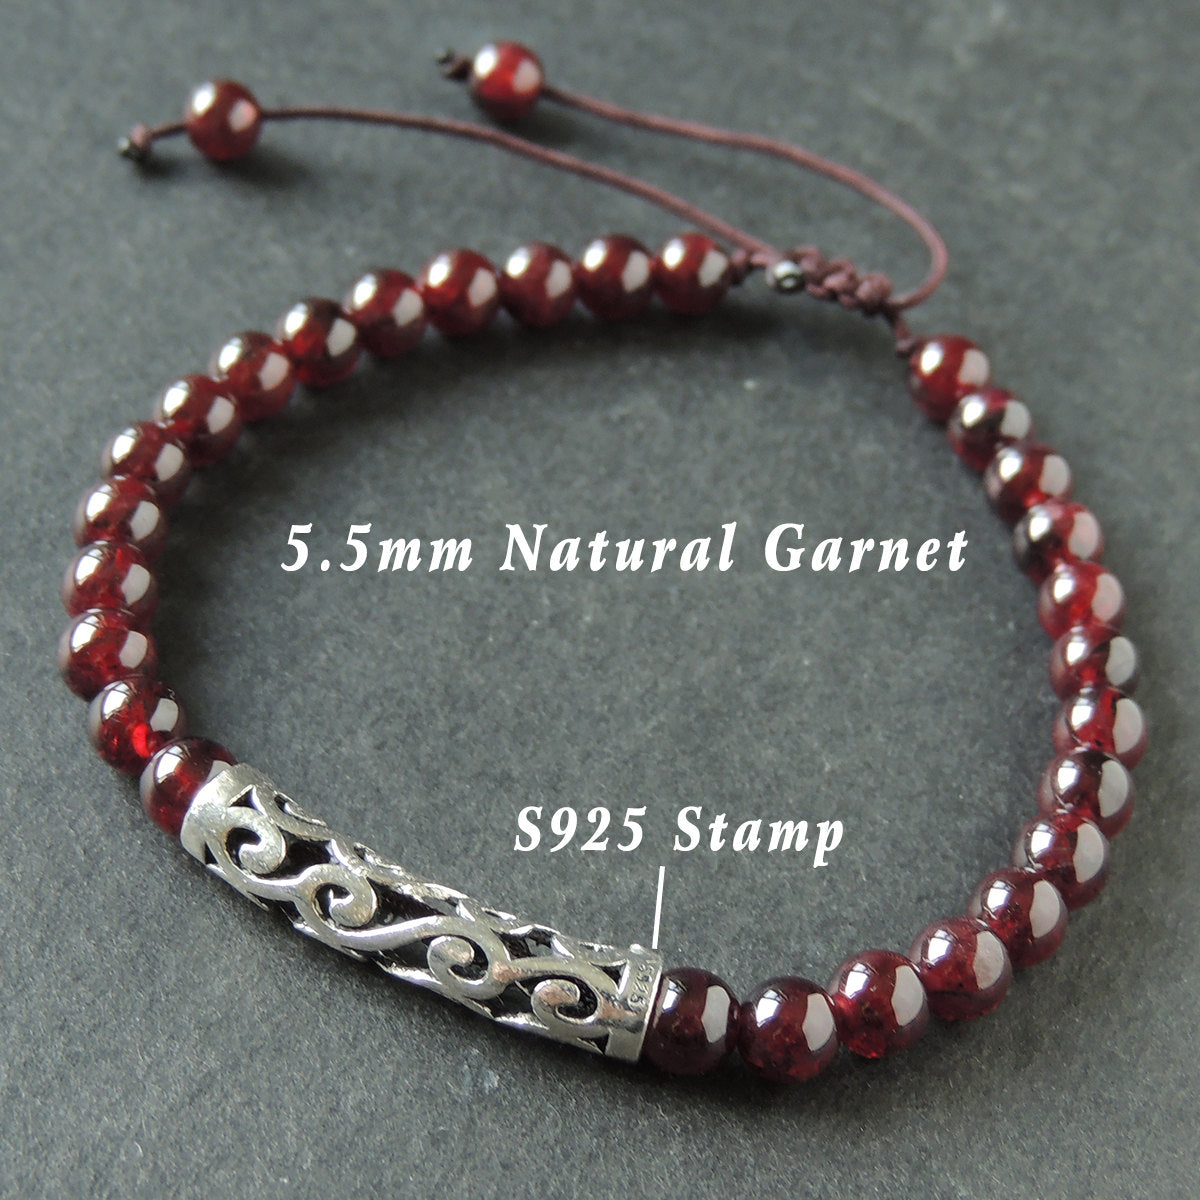 5.5mm Garnet Adjustable Braided Bracelet with S925 Sterling Silver Wave Charm - Handmade by Gem & Silver BR982